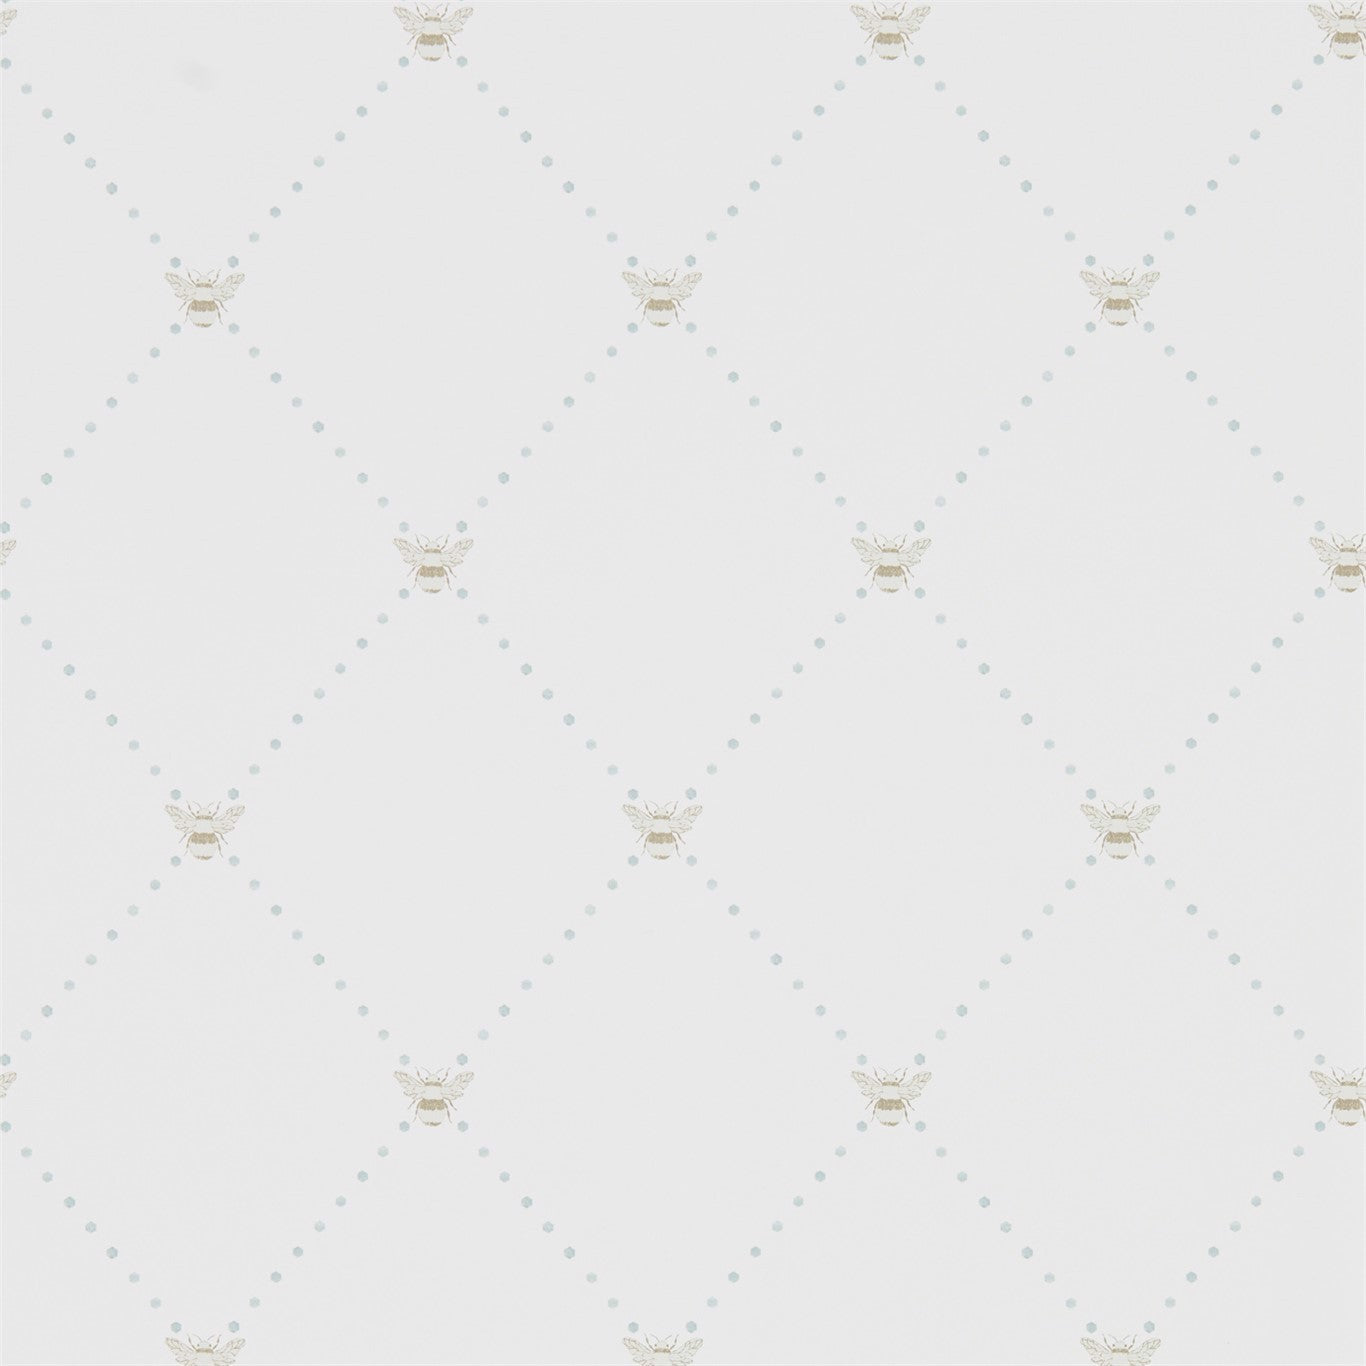 Nectar Mineral/Dove Wallpaper DHPO216354 by Sanderson